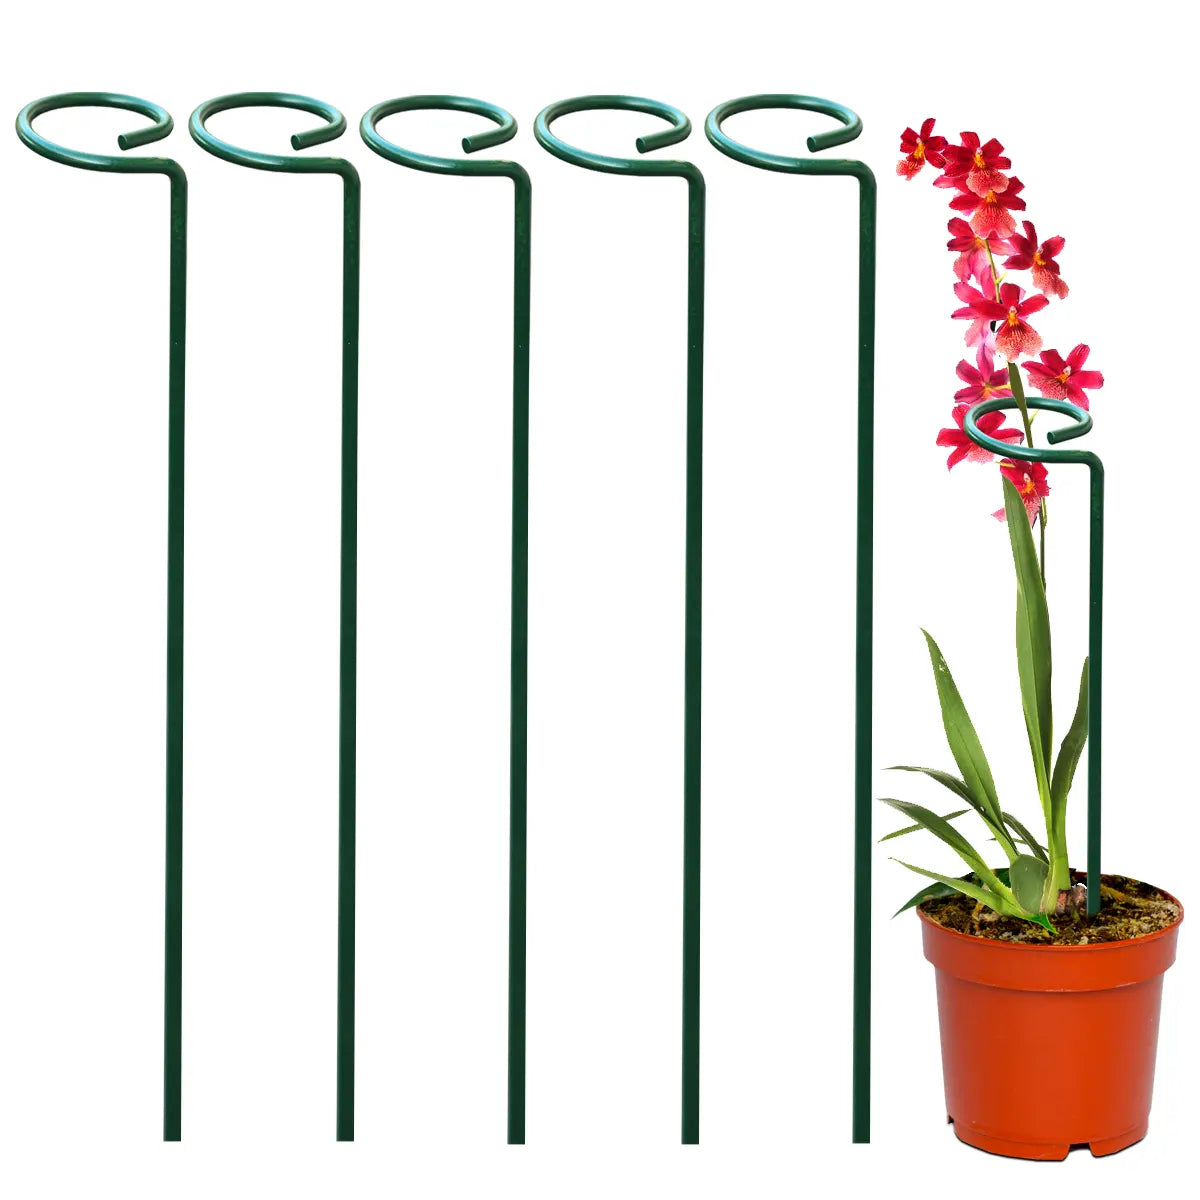 Garden Stakes - Metal Plant Support Sticks Urban Plant Set of 5 